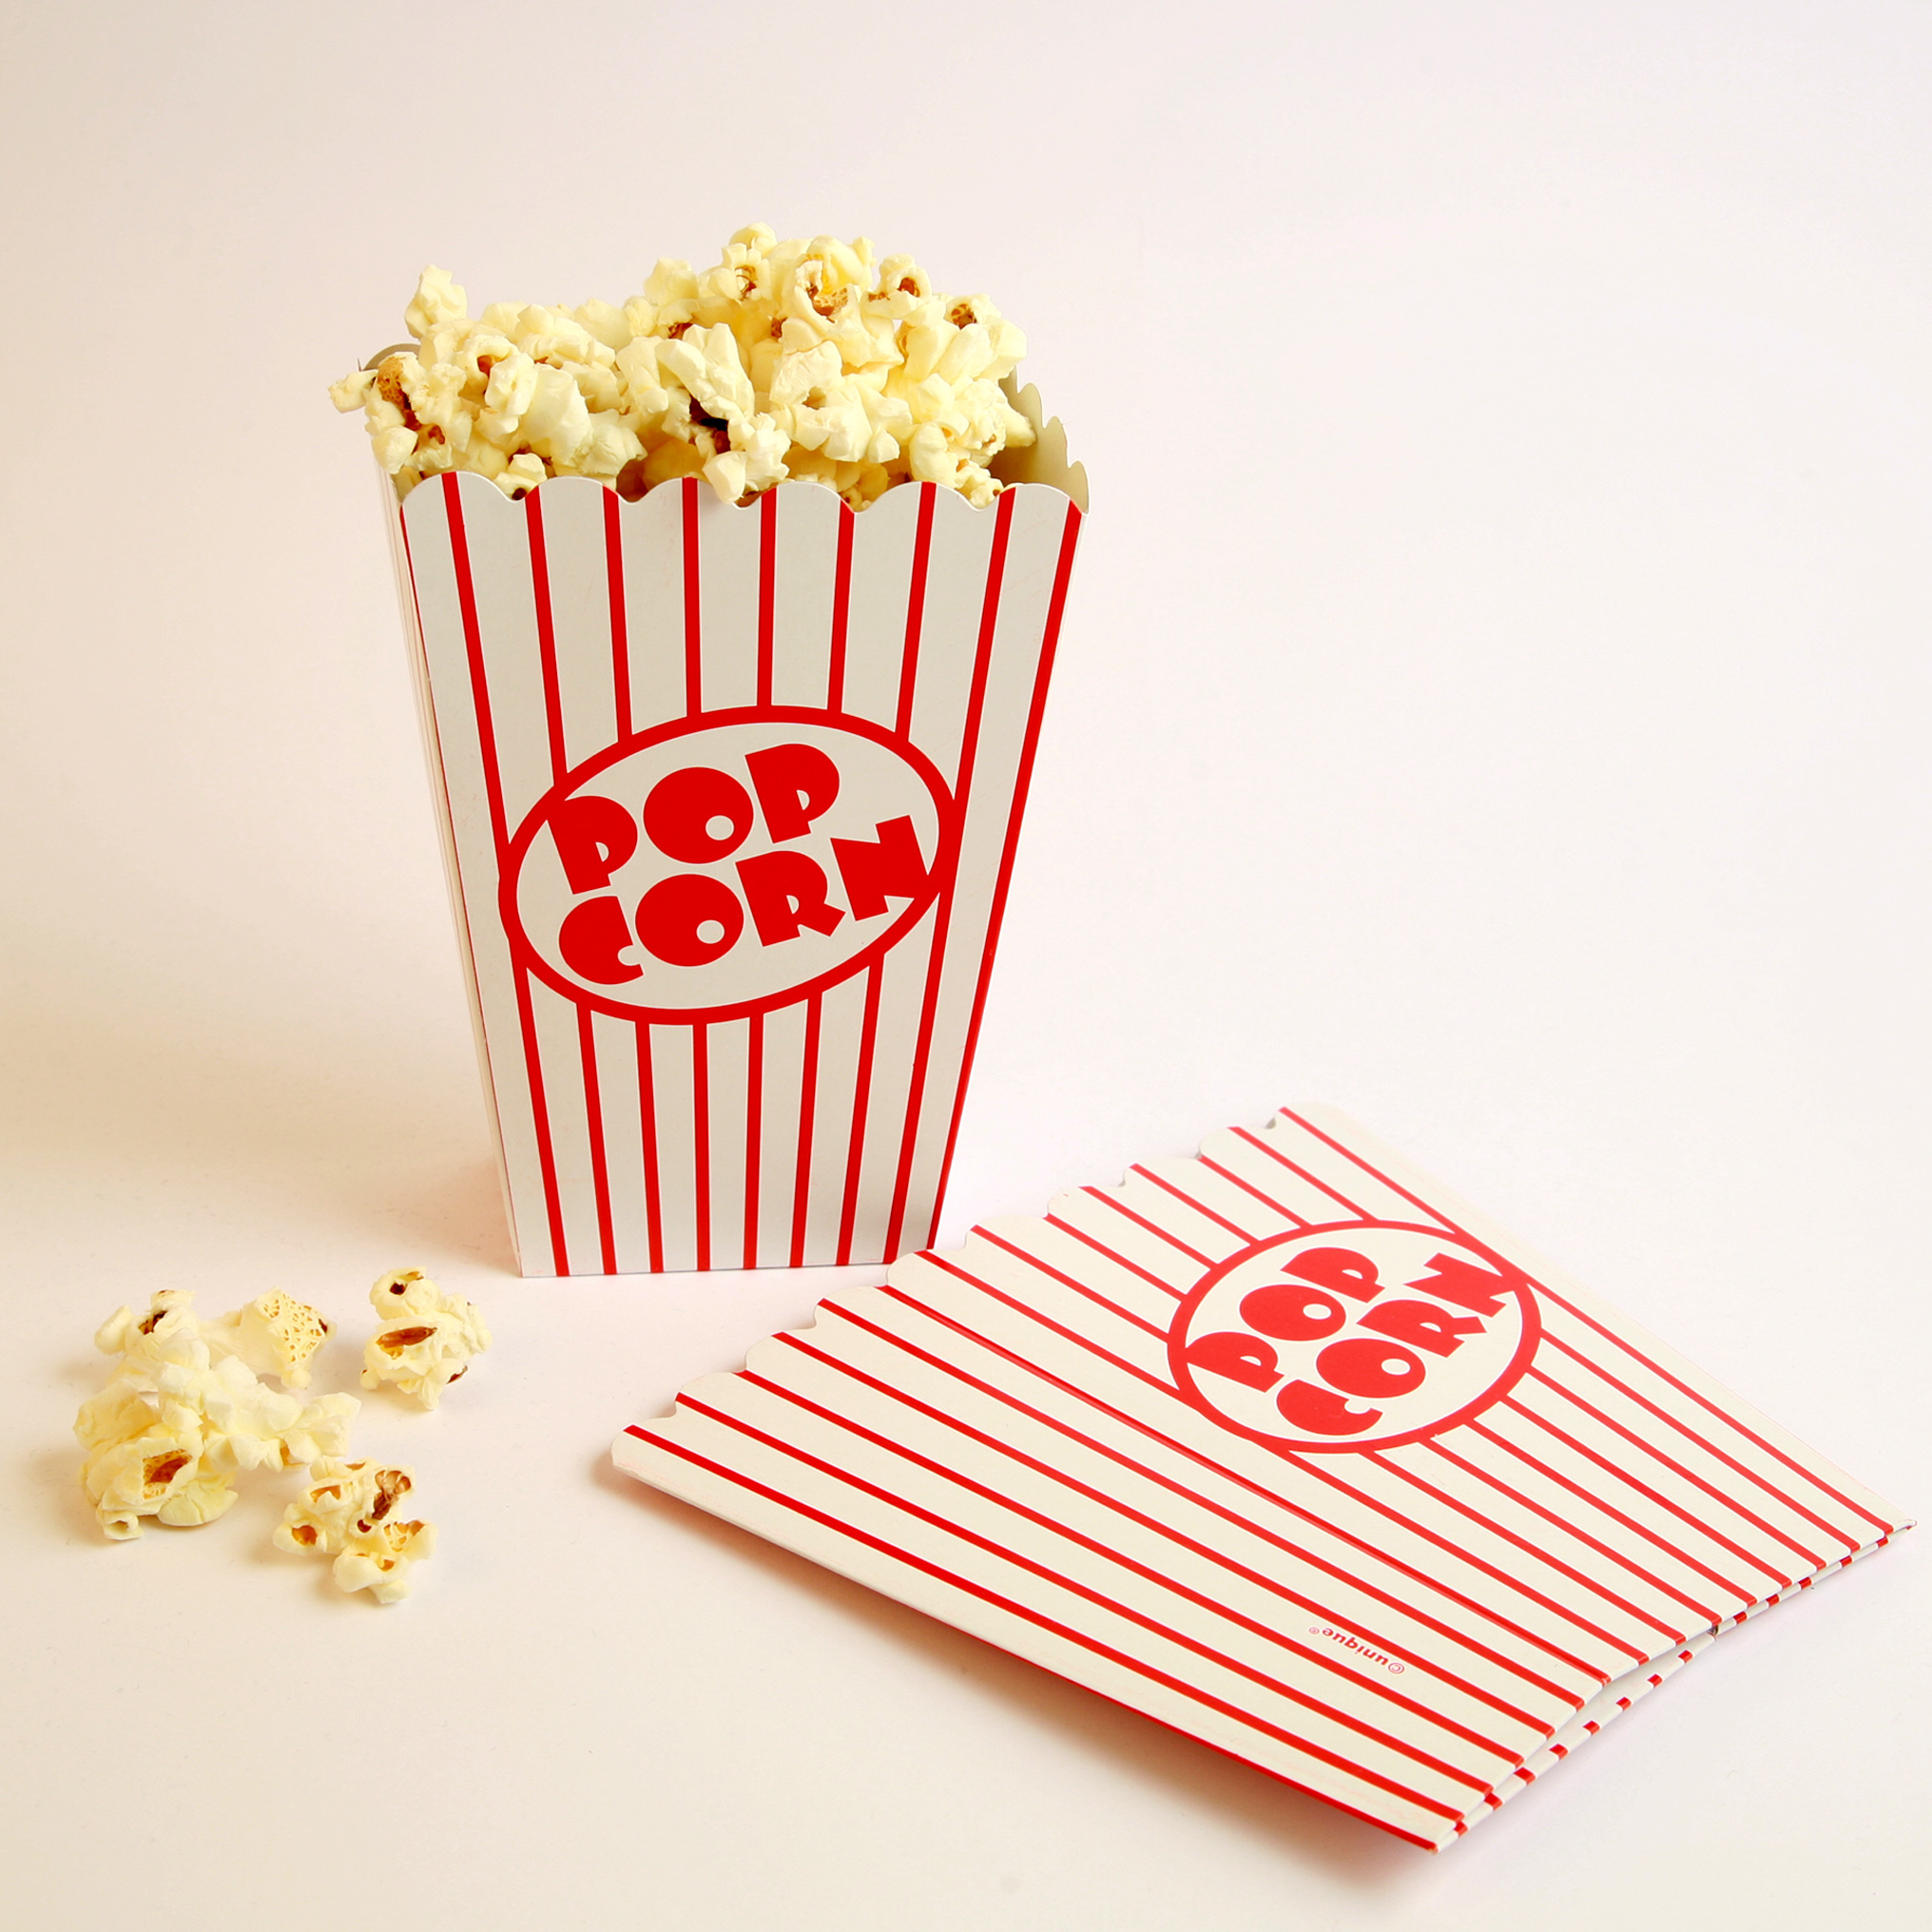 8 Small popcorn holders